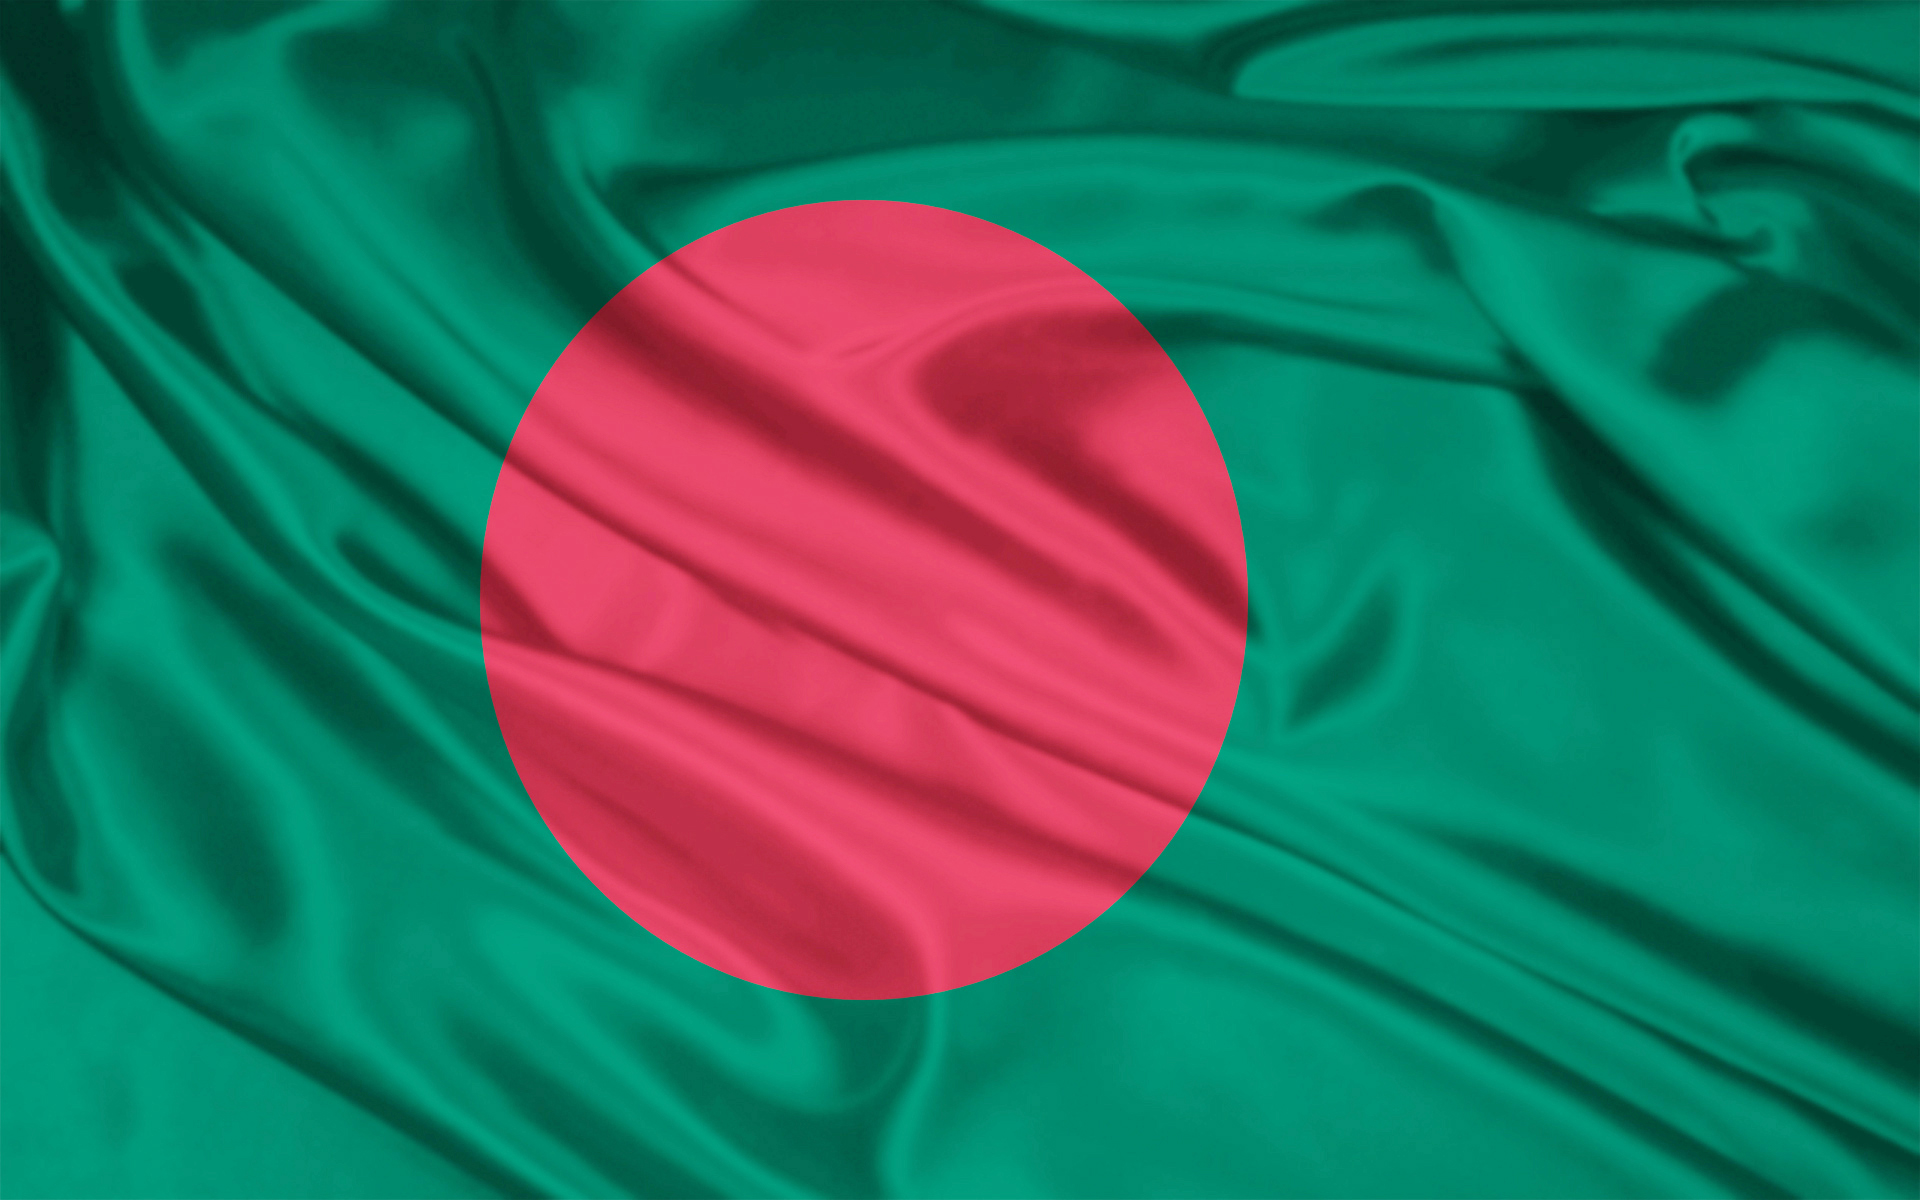 bangladesh flag wallpaper hd,verde,rosso,alzavola,turchese,acqua